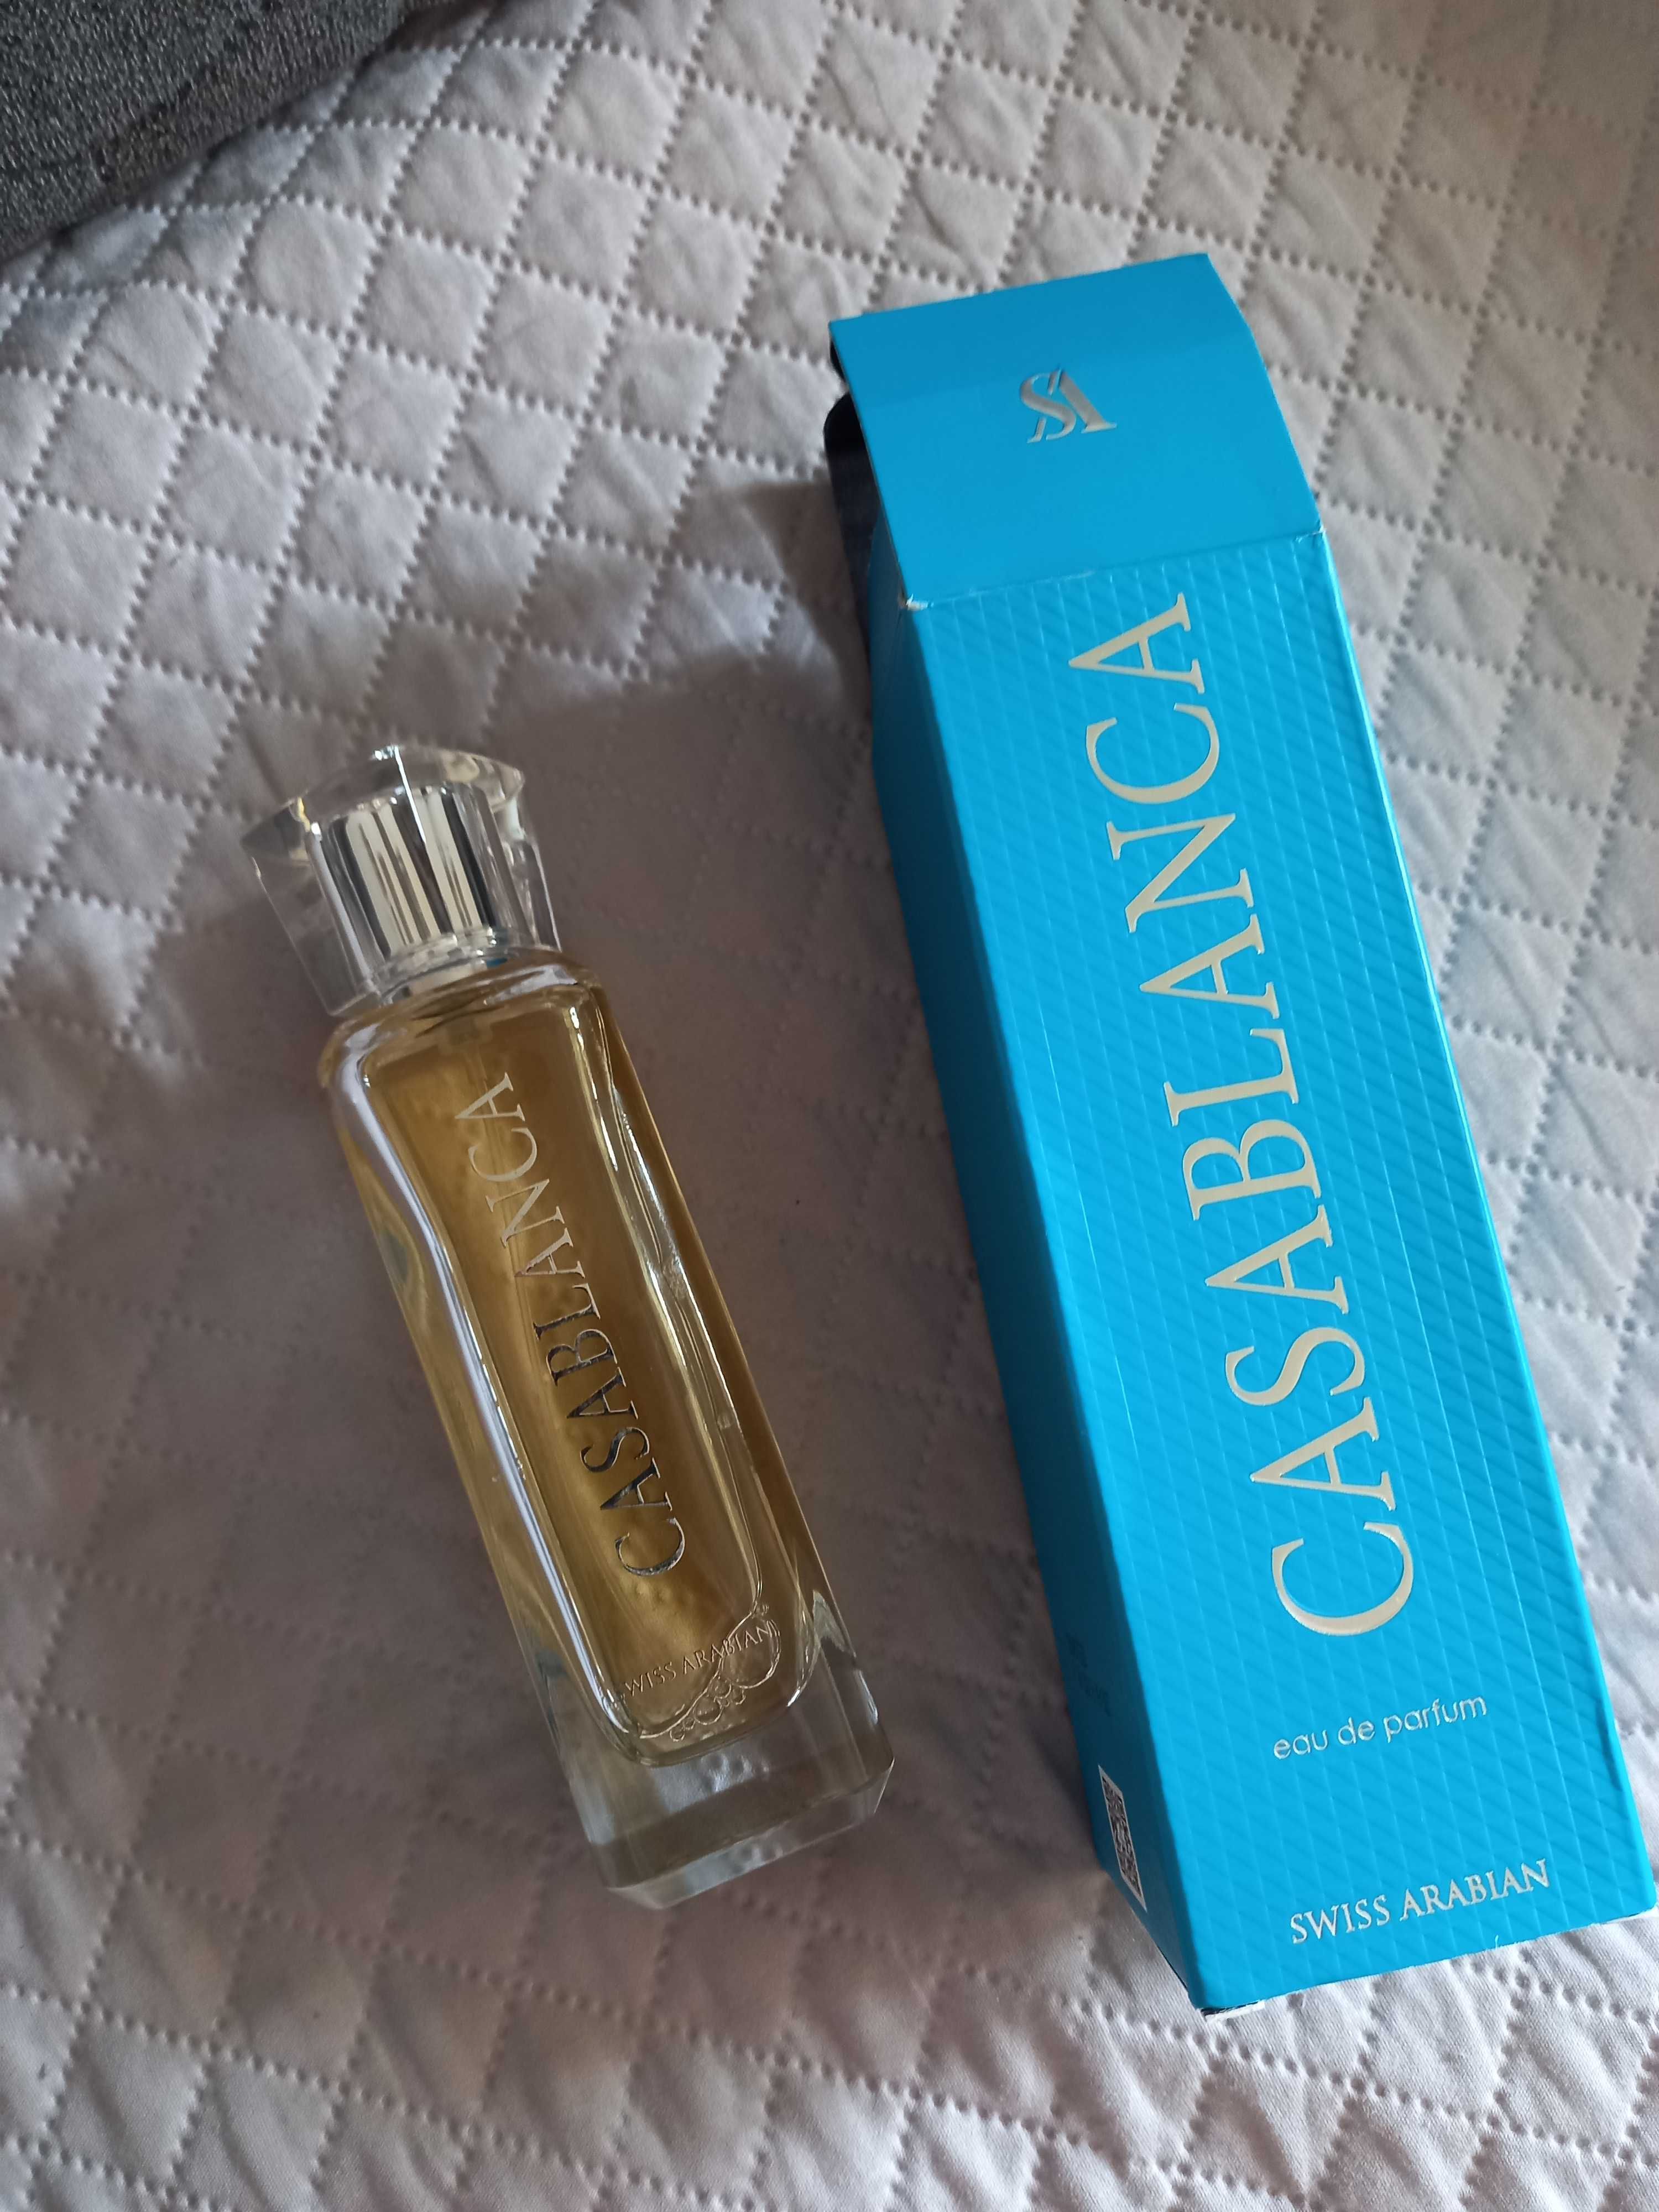 Perfumy Swiss Arabian
Casablanca